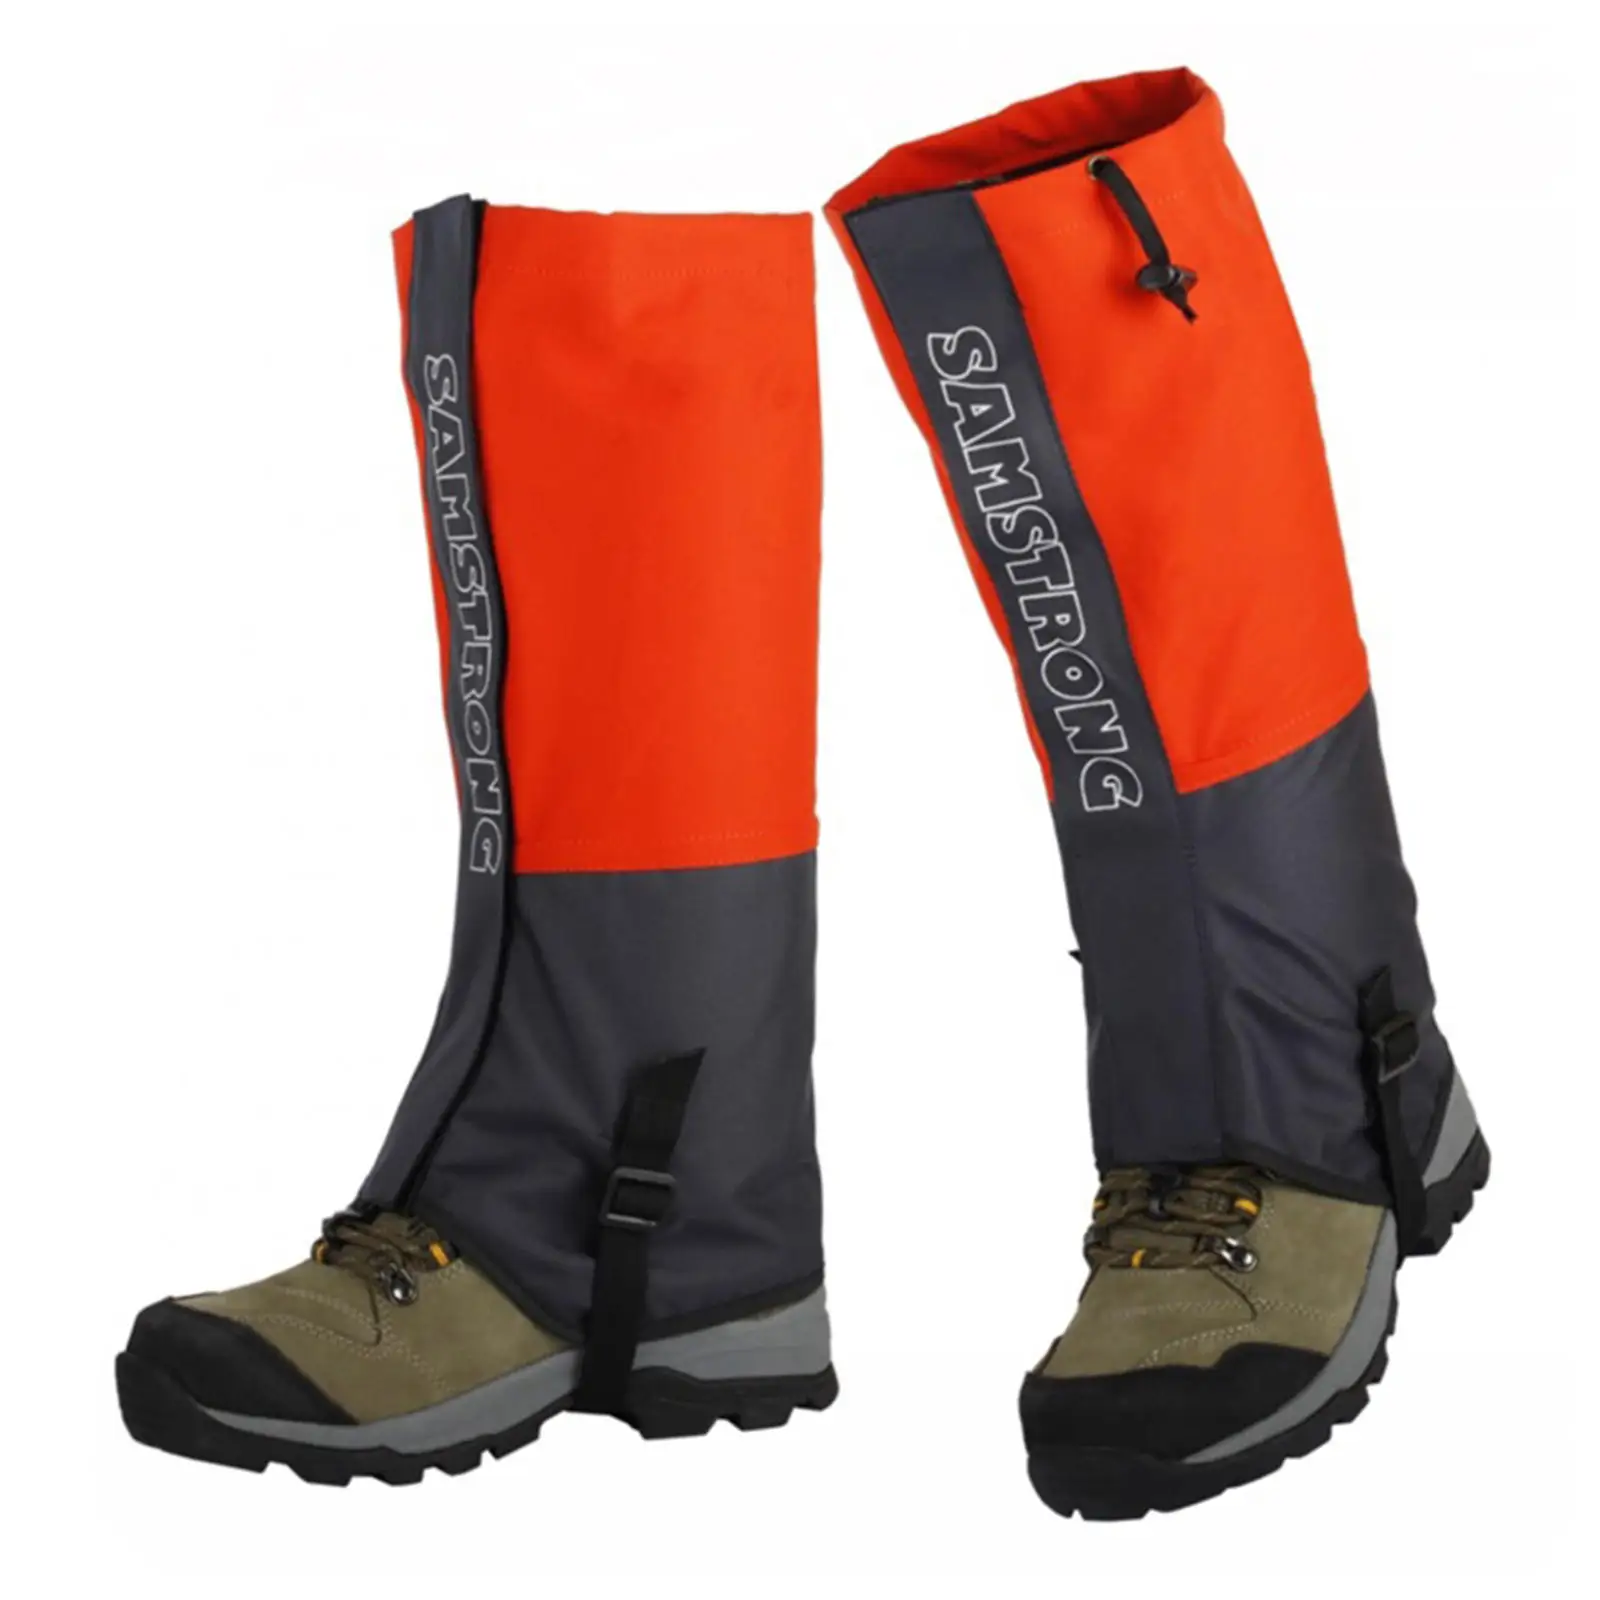 Outdoor Hiking Walking Legging Gaiters Waterproof Leg Covers Hunting Hiking Climbing Camping Ski Travel Leg Warmers Foot Covers